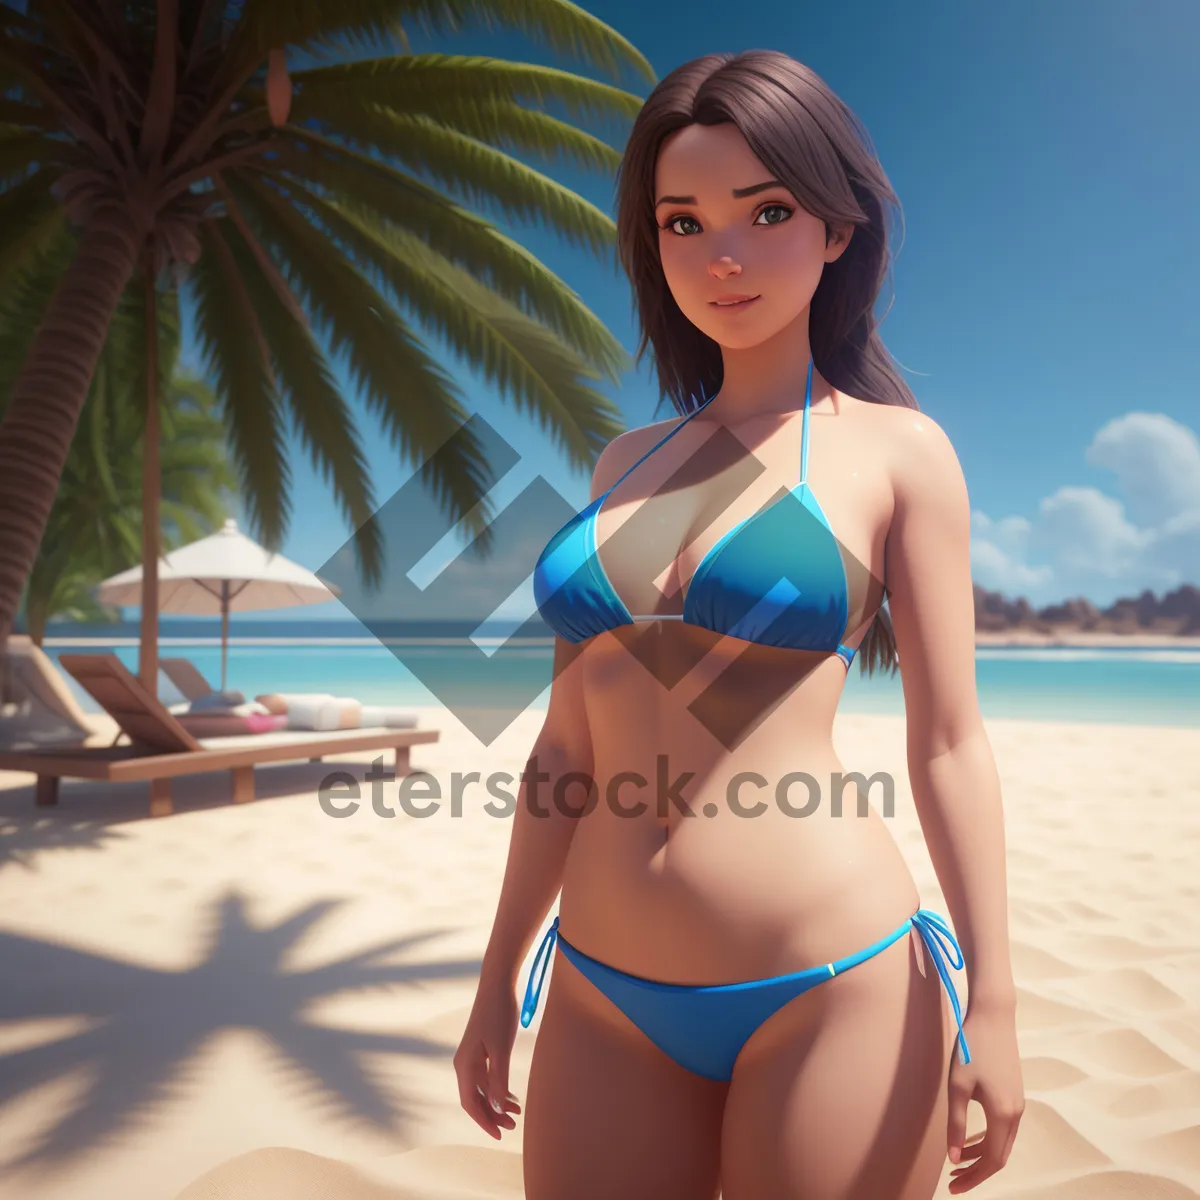 Picture of Beach Babe: Sexy Bikini Model Enjoying Tropical Vacation